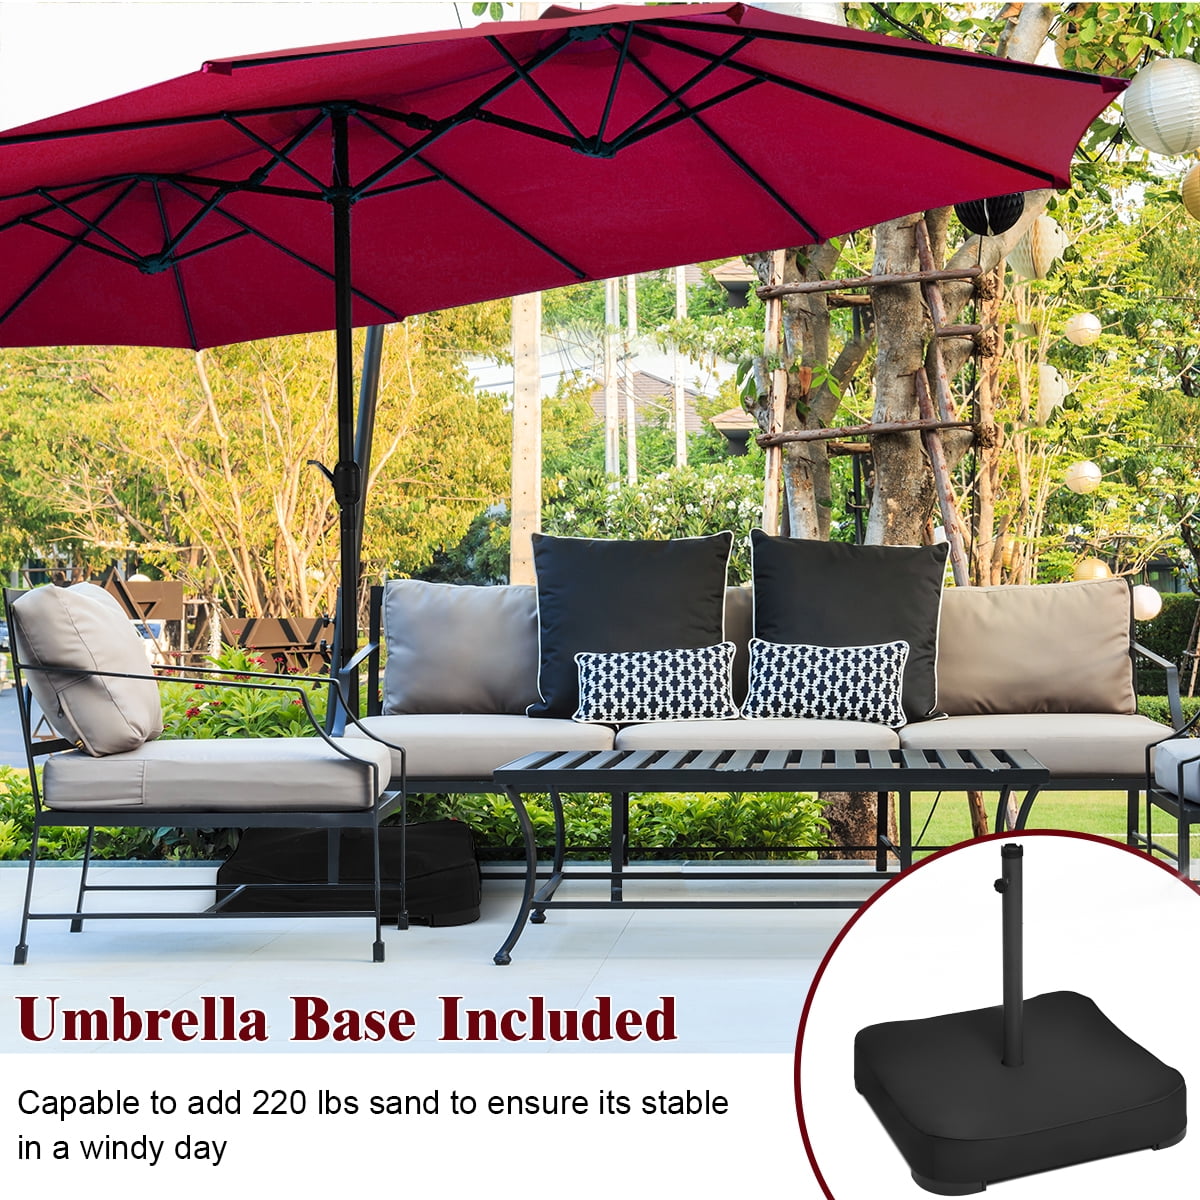 Adjustable Umbrella with Universal Clamp Midnight Blue for sale online Sport Brella Versa-Brella SPF 50 